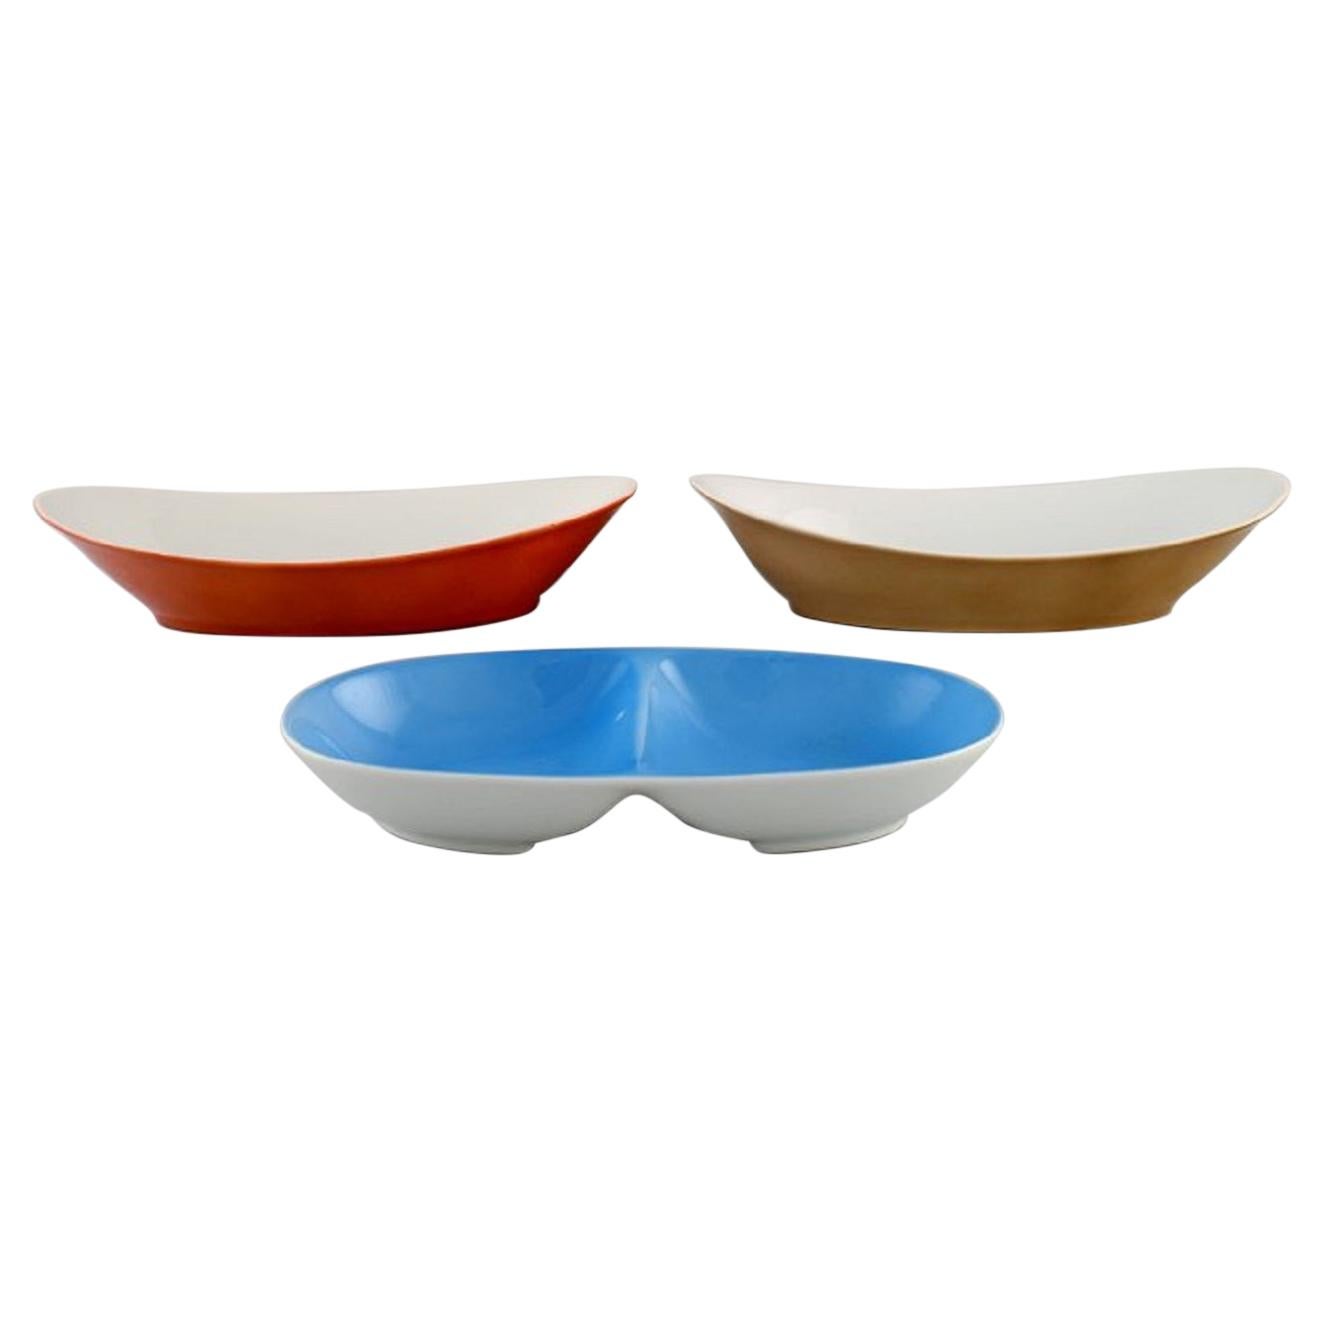 Kenji Fujita for Tackett Associates, Three Bowls in Porcelain, Dated 1953-56